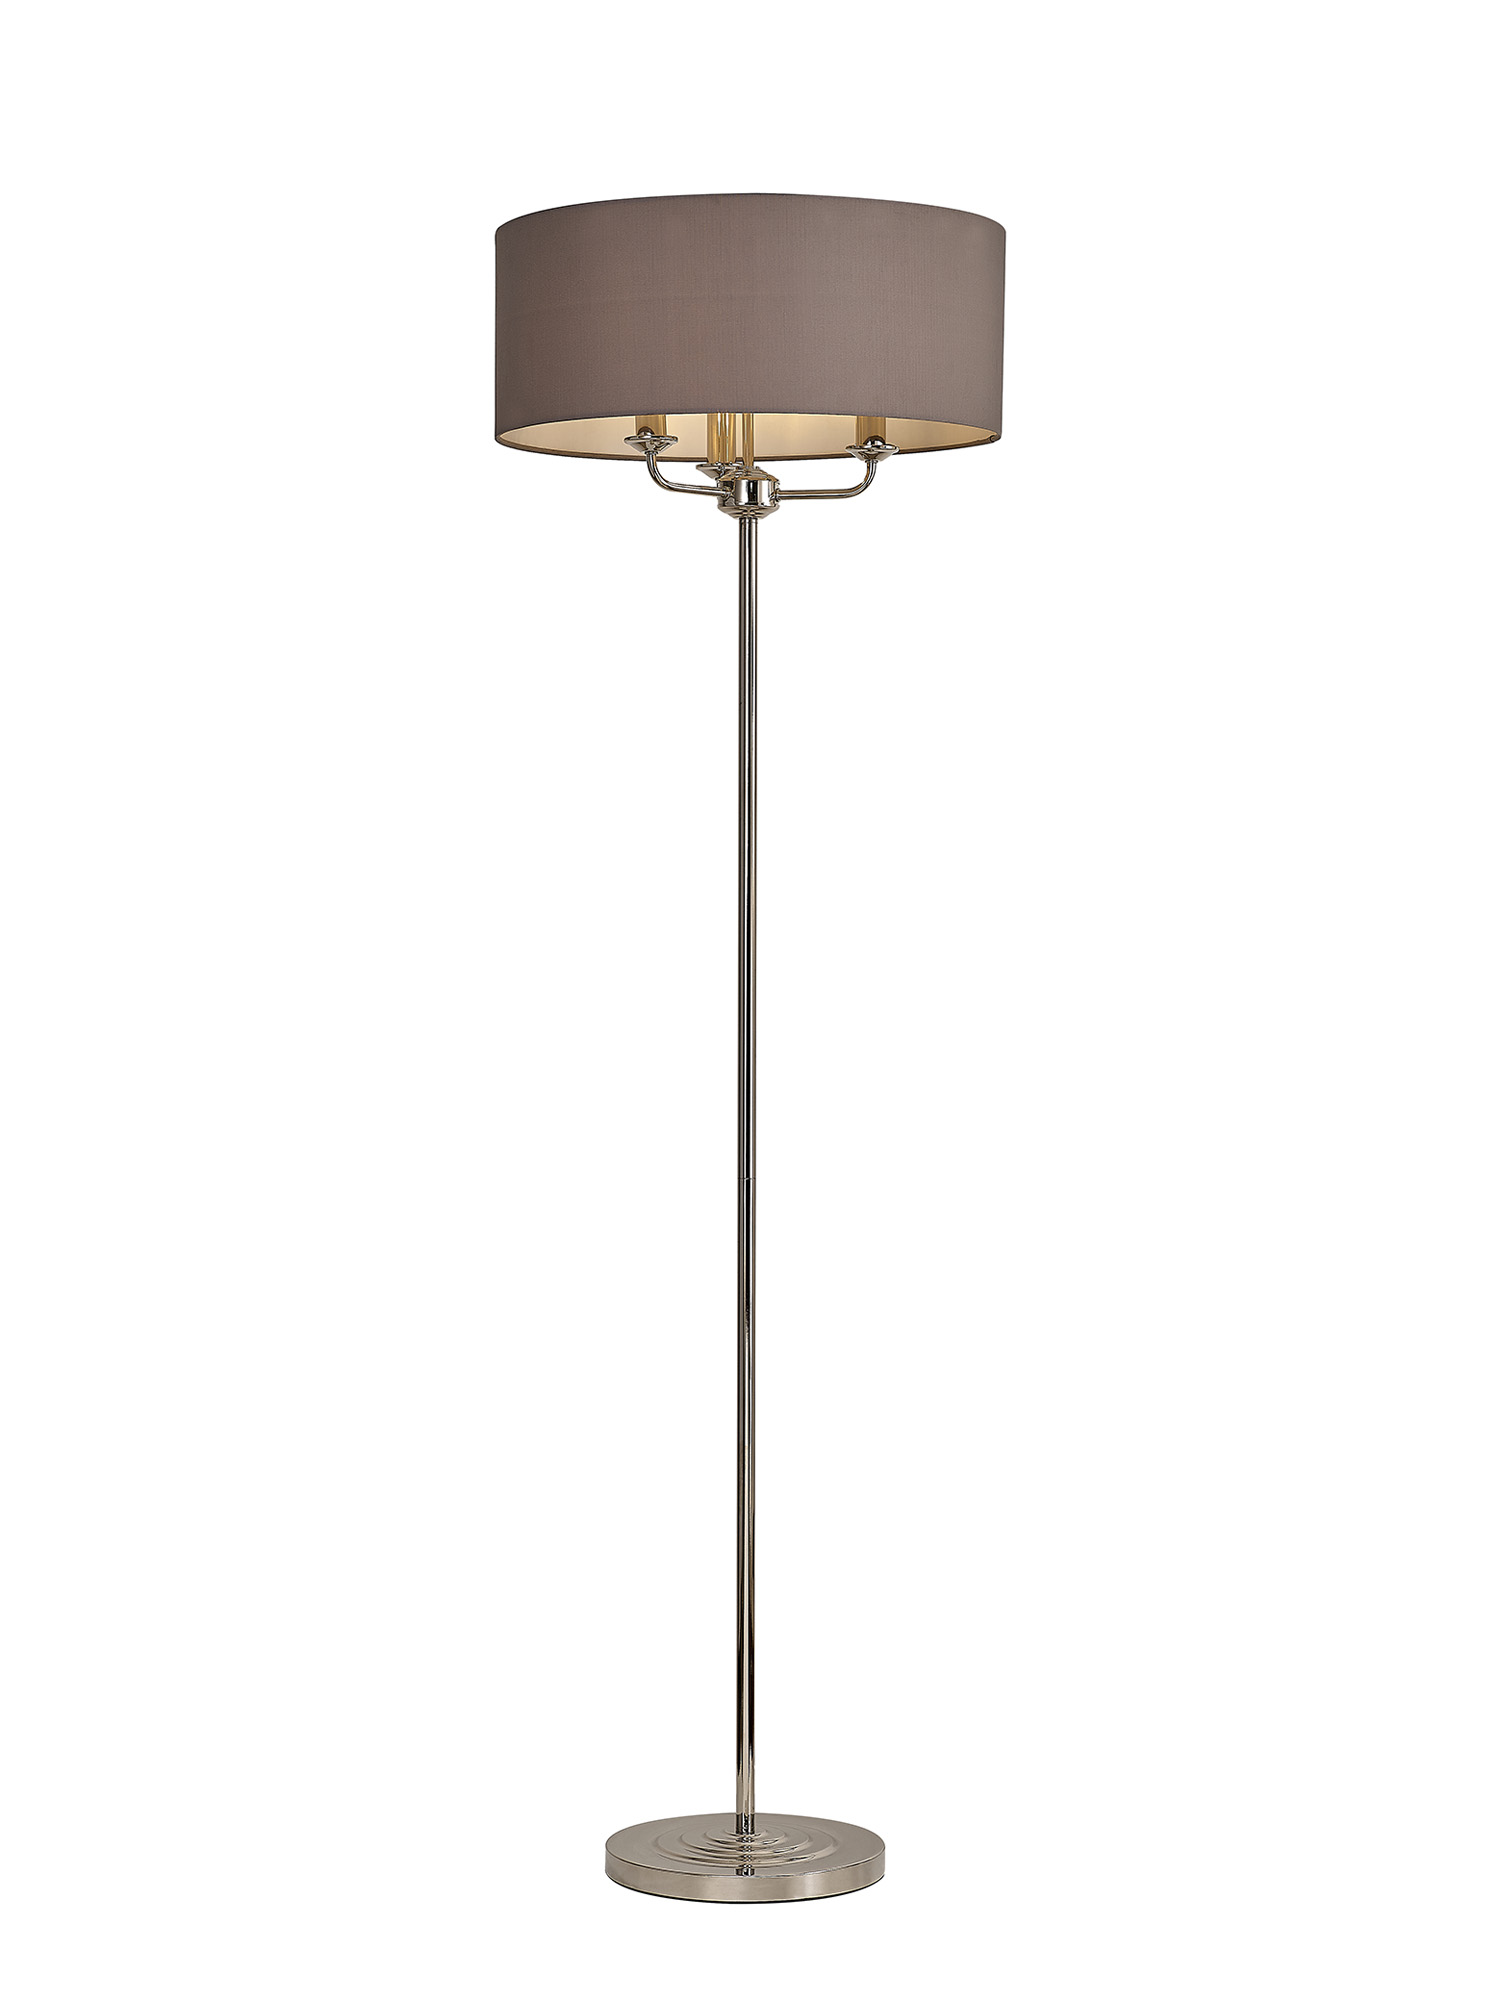 DK0894  Banyan 45cm 3 Light Floor Lamp Polished Nickel, Grey